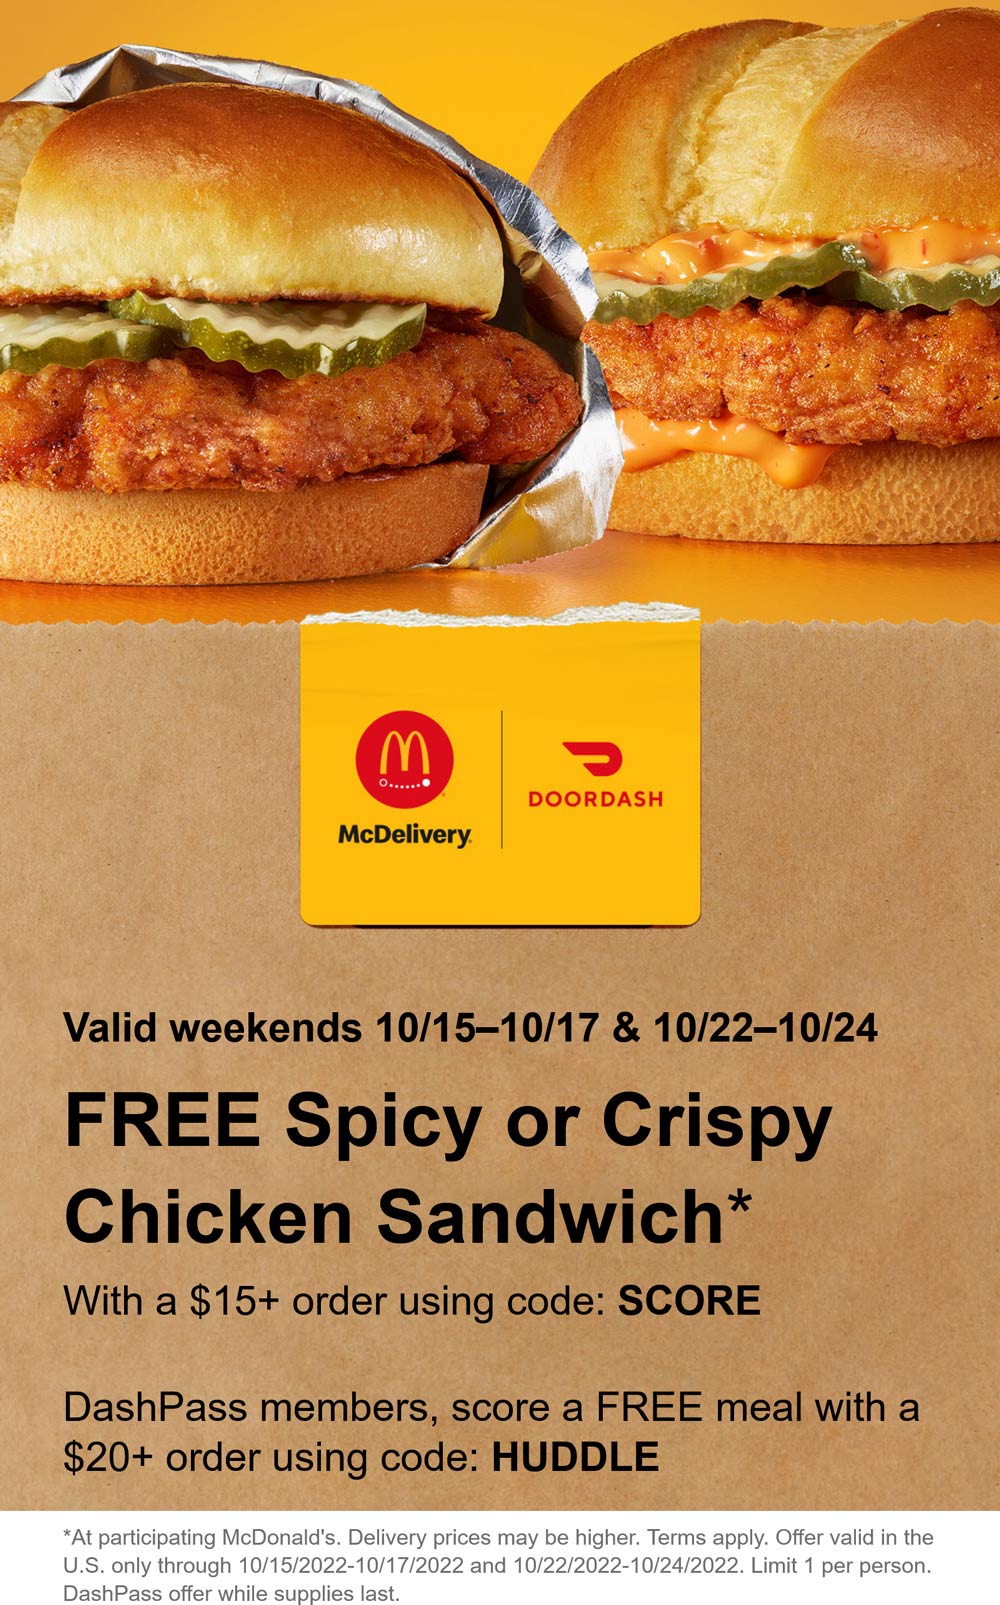 McDonalds restaurants Coupon  Free chicken sandwich on $15 delivery & more at McDonalds via promo code SCORE #mcdonalds 